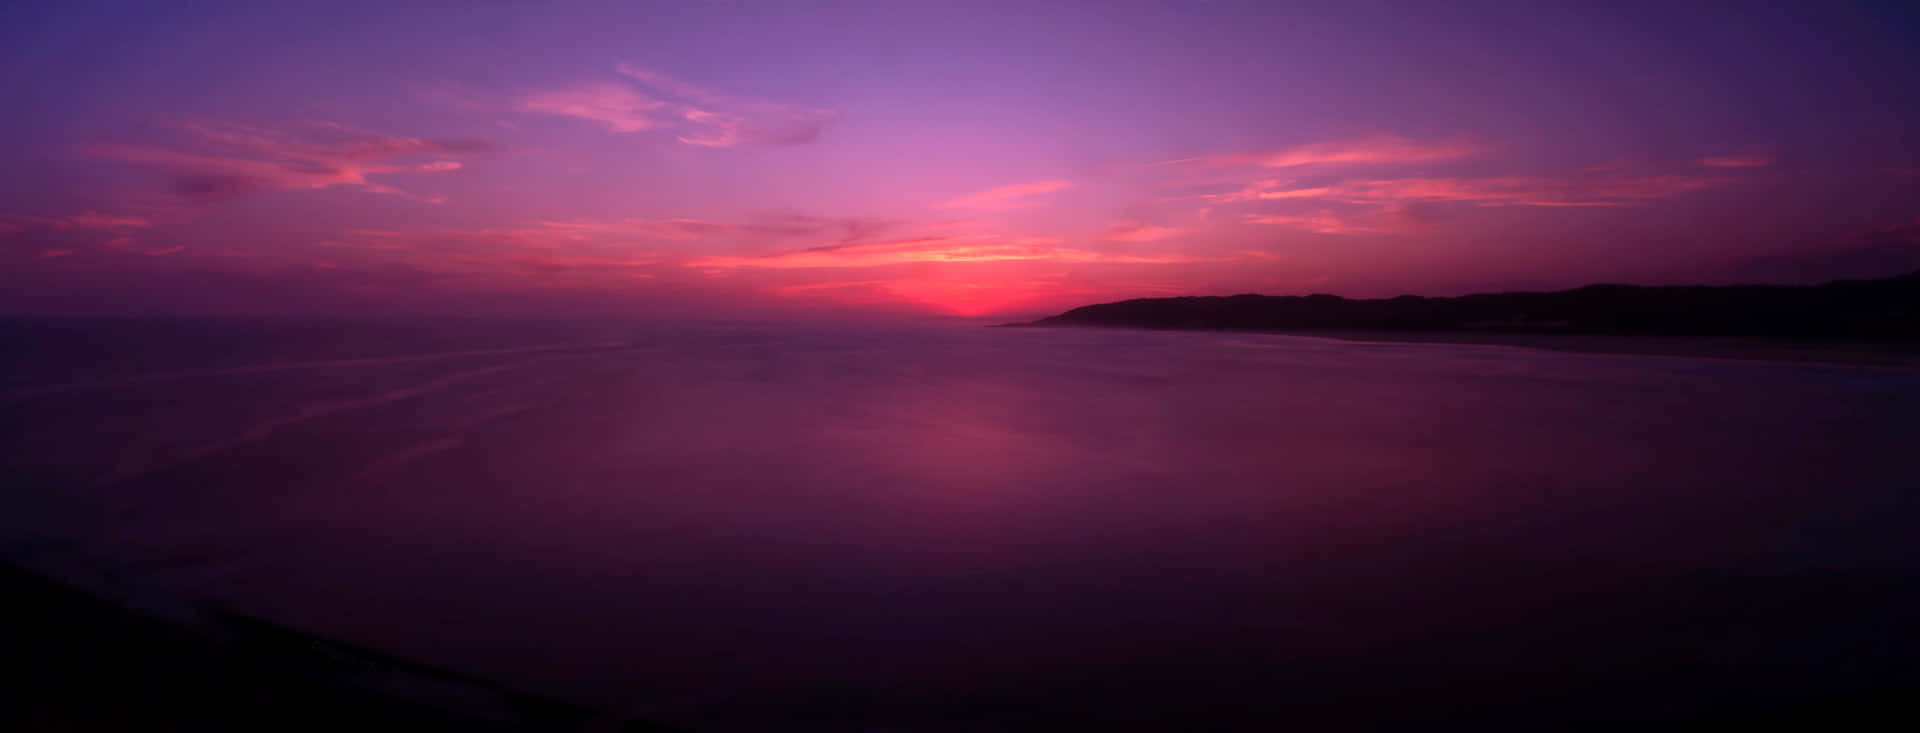 A Purple Sunset Over The Ocean Wallpaper